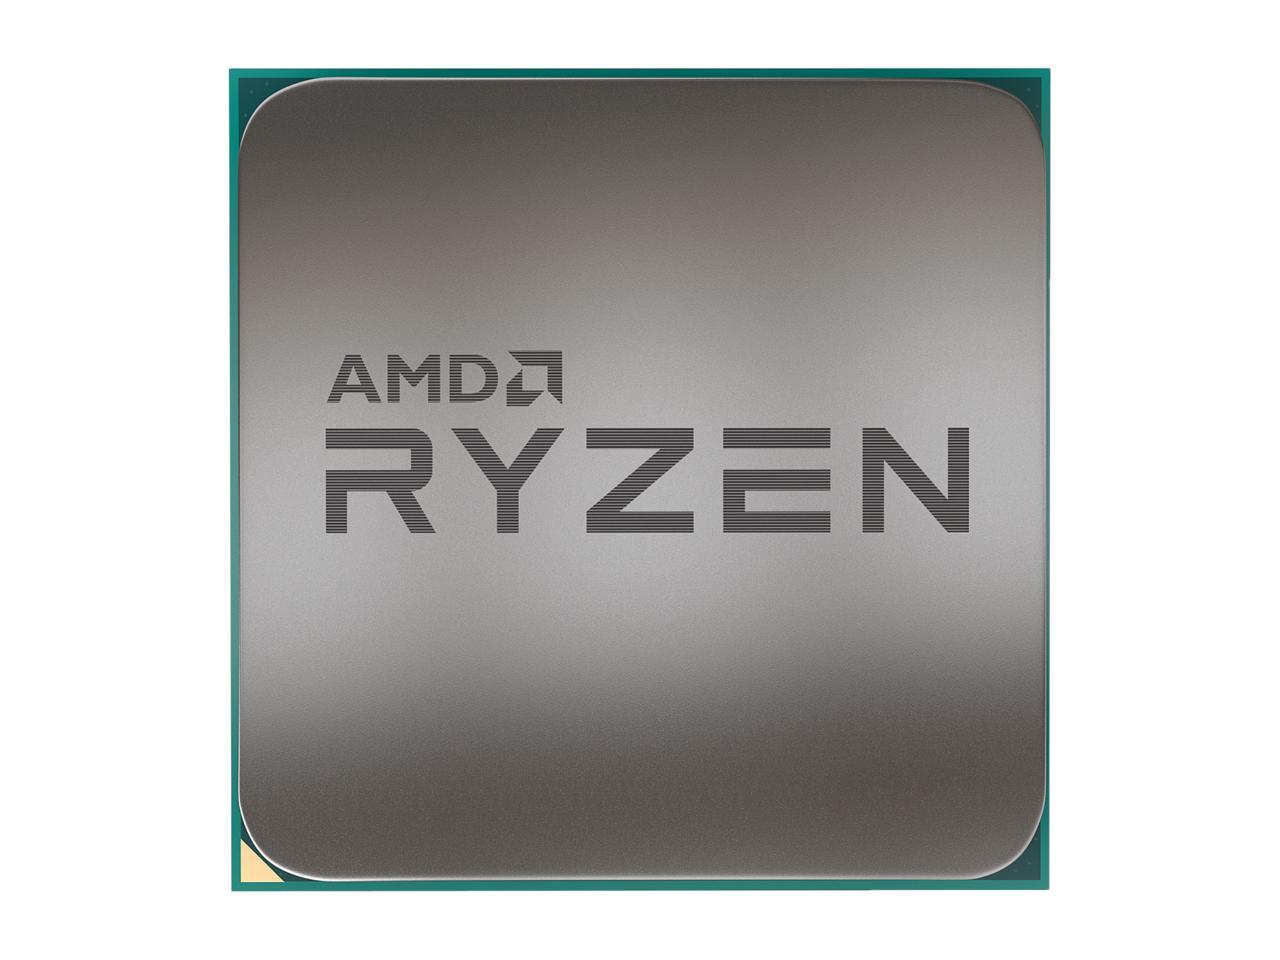 Amd 100-100000025Box Ryzen 7 3800X Desktop Processors / 3.9Ghz/ Eight-Core/ Pcie 4.0/ Retail